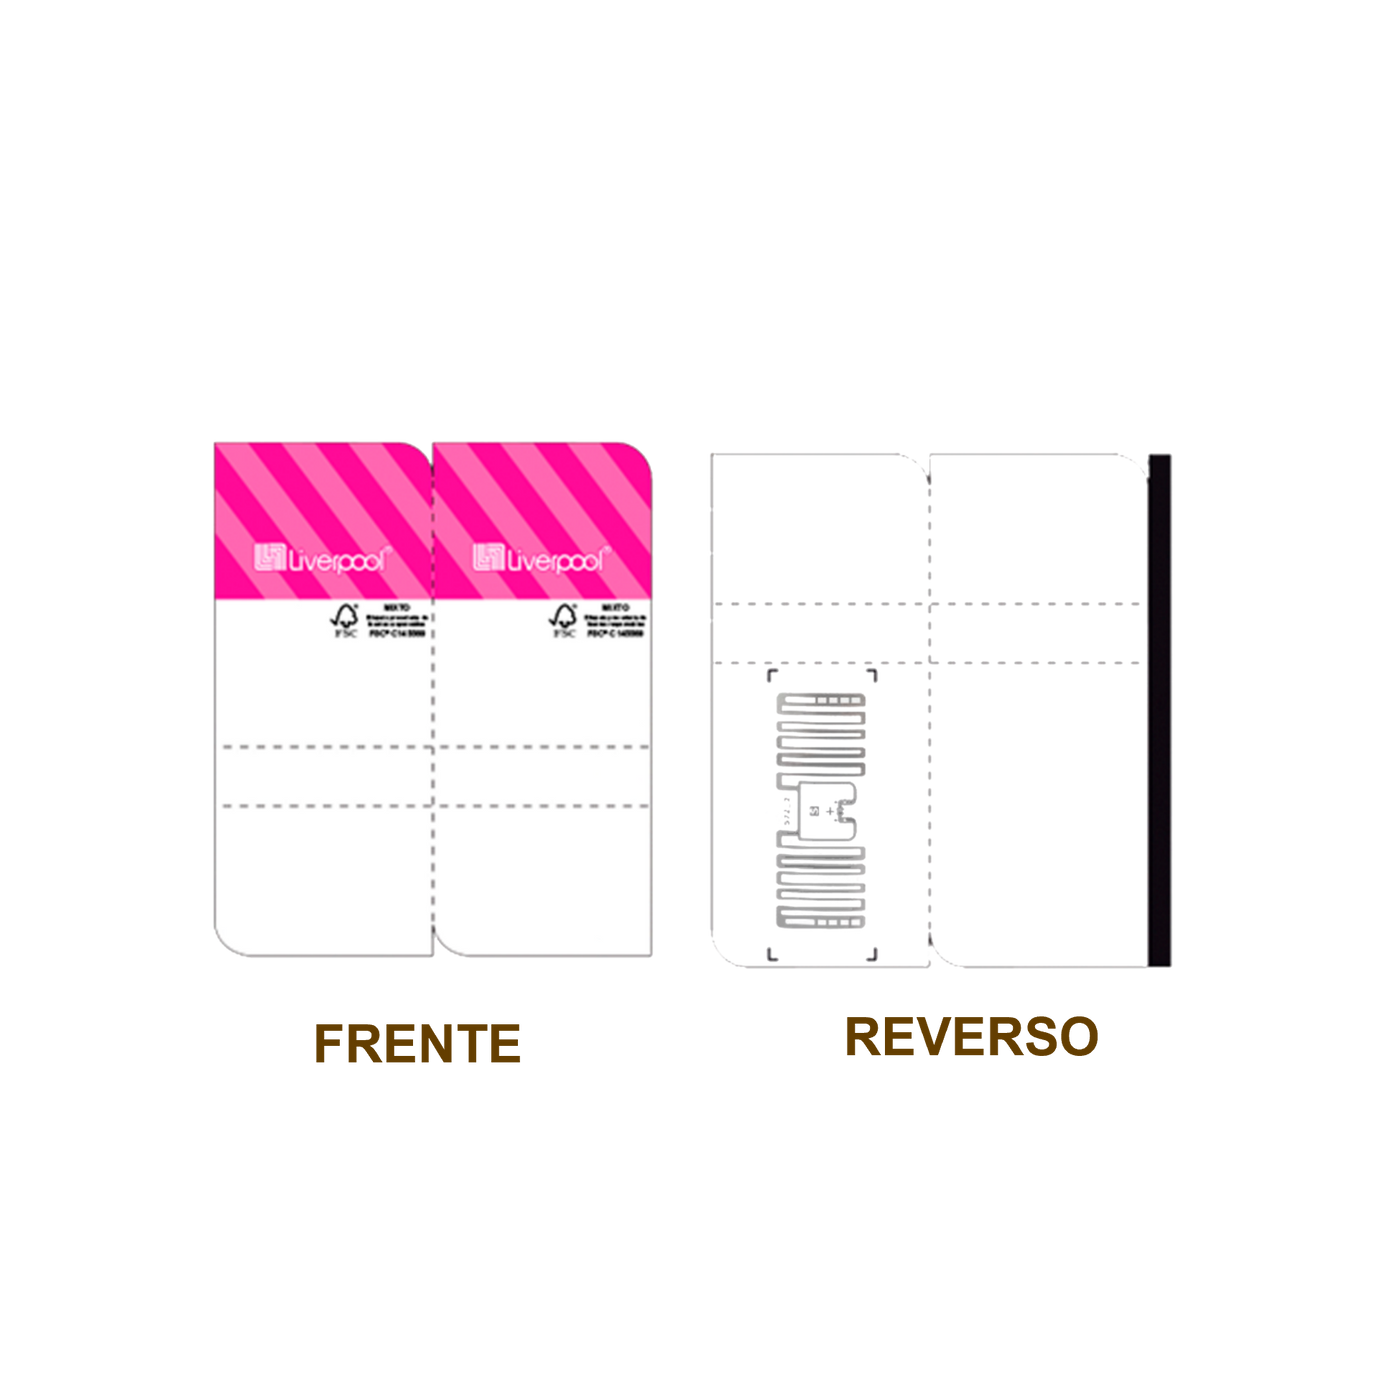 20 Millares de Etiqueta RFID TTR adherible blanca con impresión rosa, 87mm x 74 mm con inlay, Miniweb M730 de Avery Dennison, Clase 1 Gen 2, UHF 860-960 Mhz, EPC 128 Bit